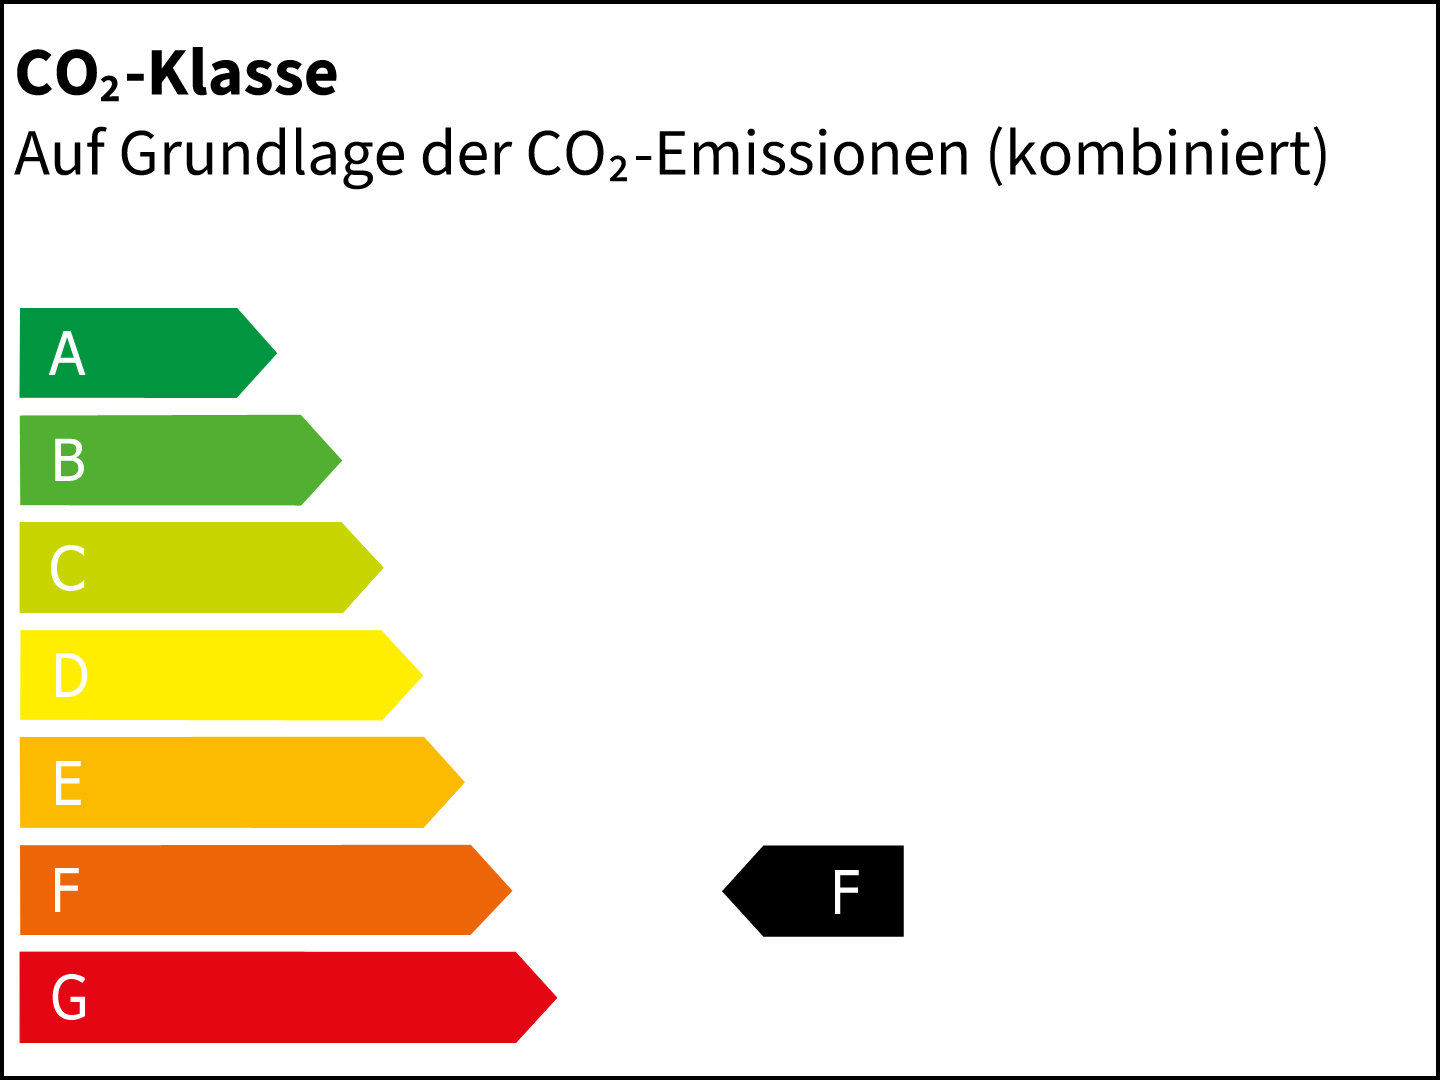 CO2-Klasse: F